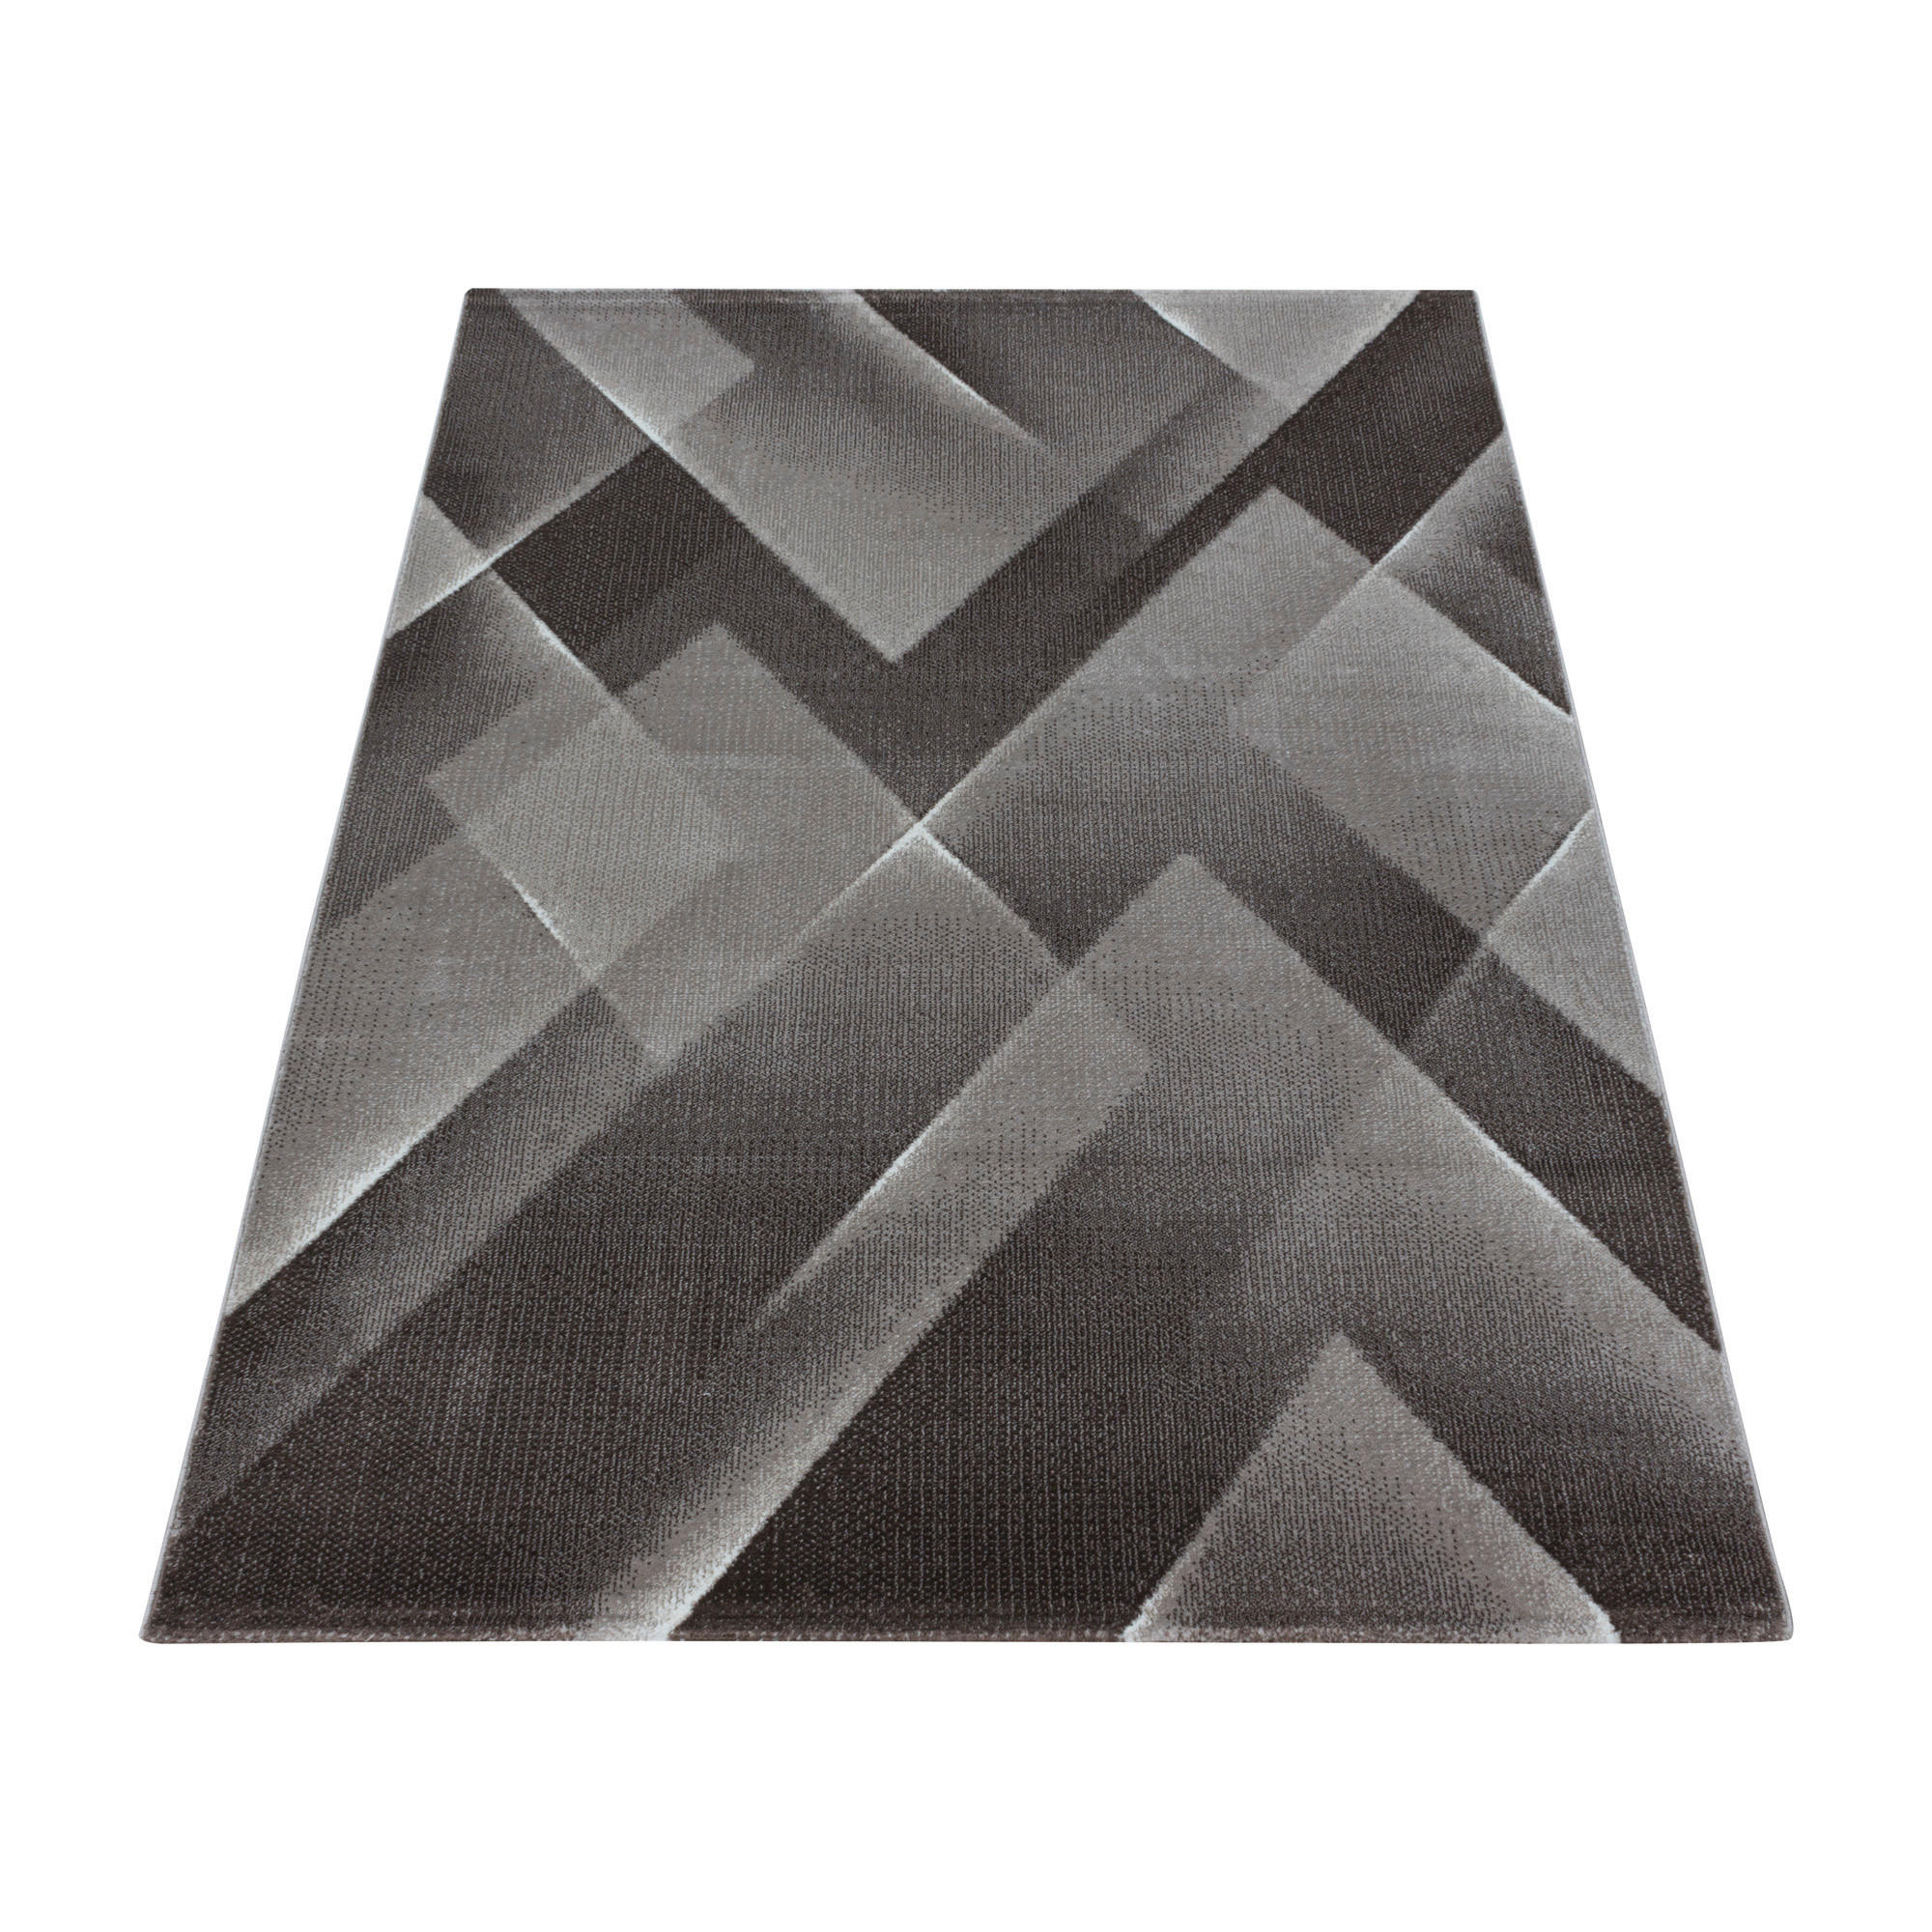 WEBTEPPICH  80/150 cm  Braun   - Braun, Design, Textil (80/150cm) - Novel